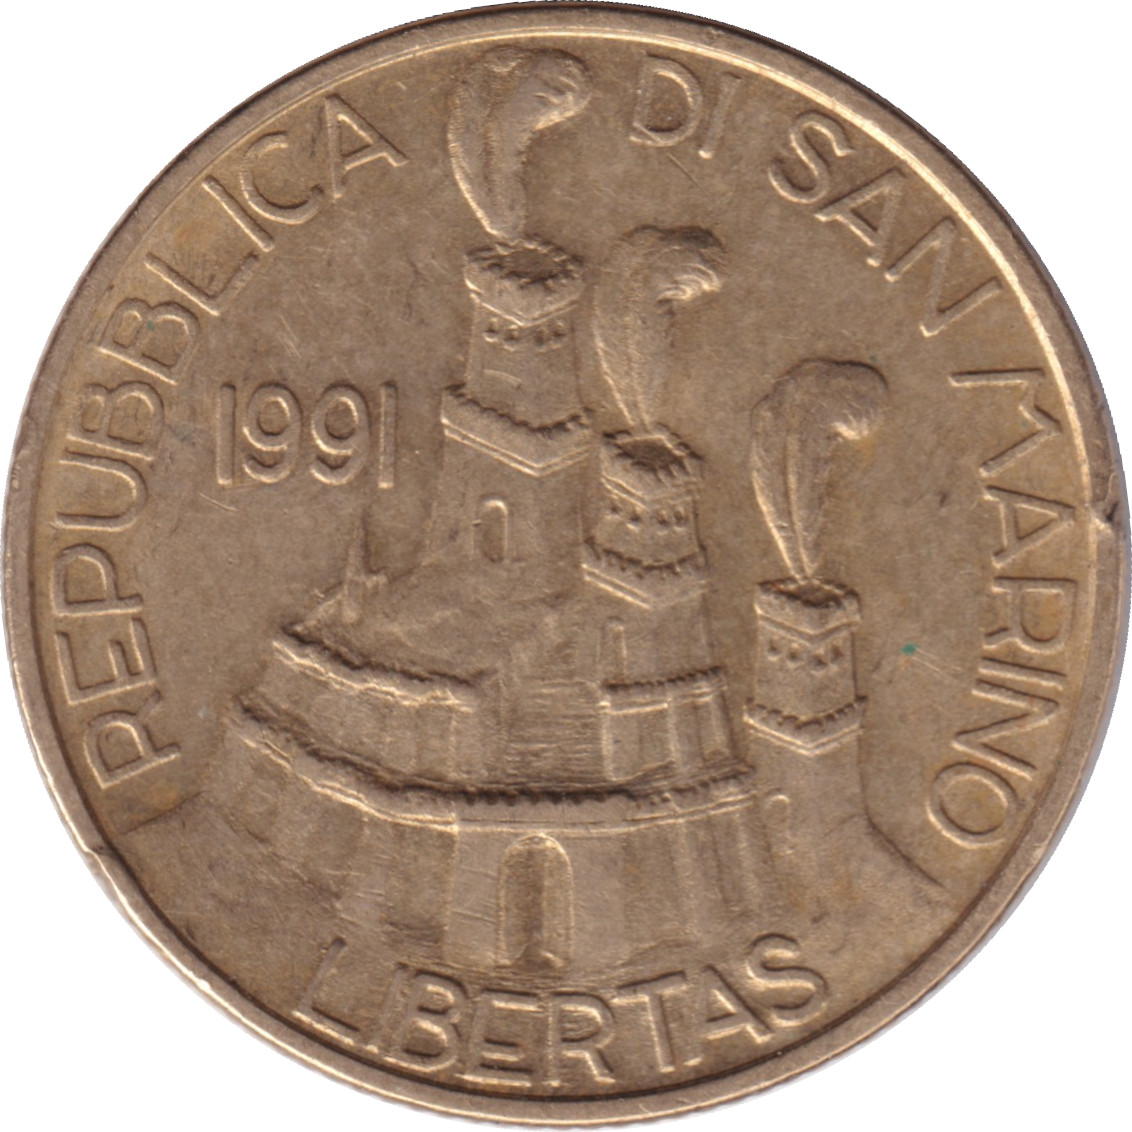 200 lire - Fondation - 1690 years - Type 2